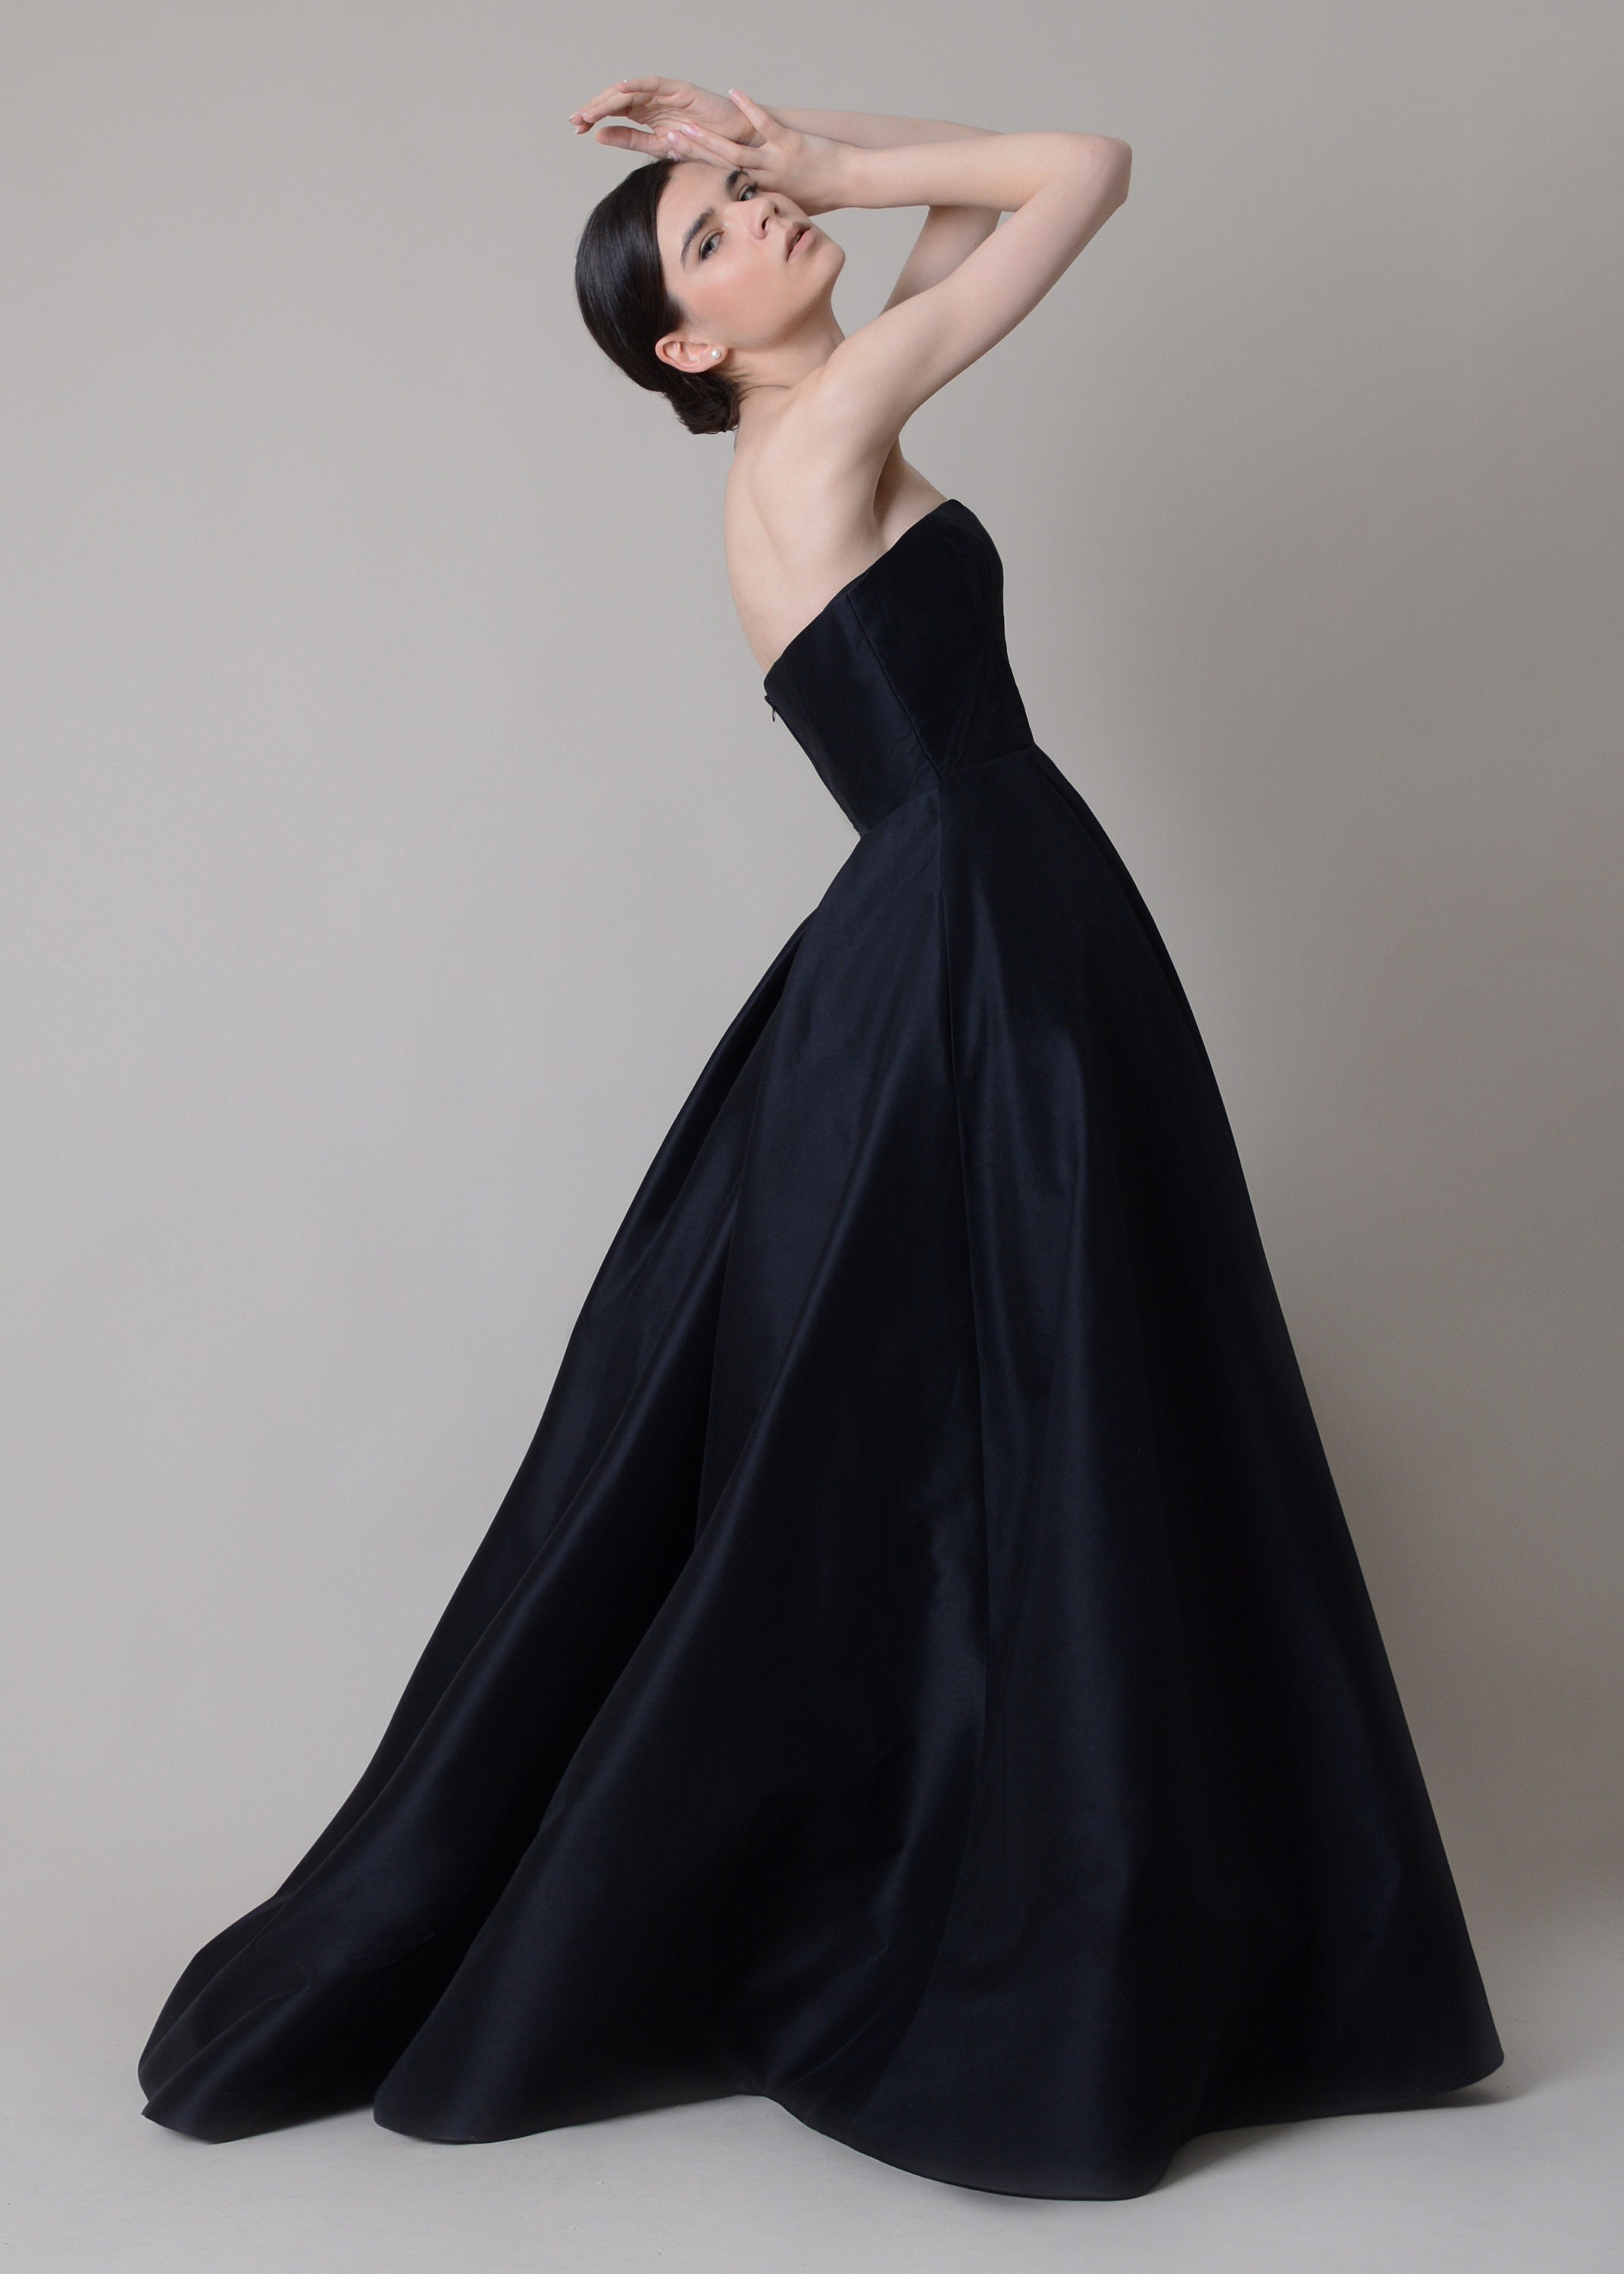 Silk Taffeta Ball Gown Black Wedding Dress - Etsy